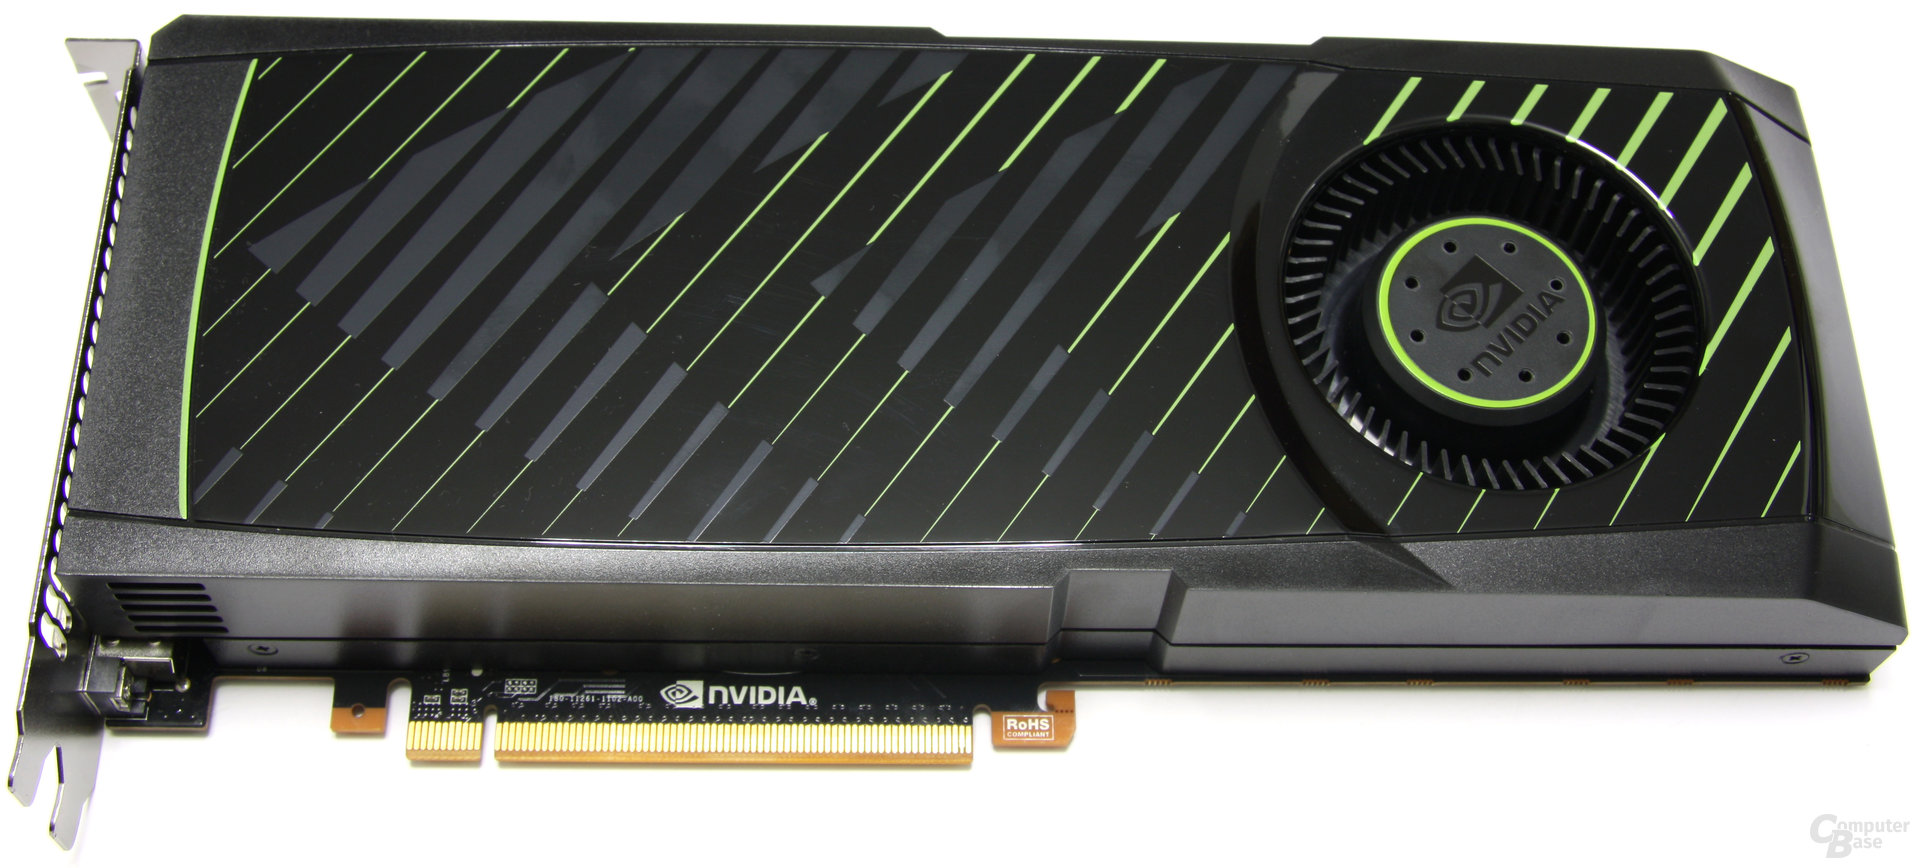 Nvidia GeForce GTX 570